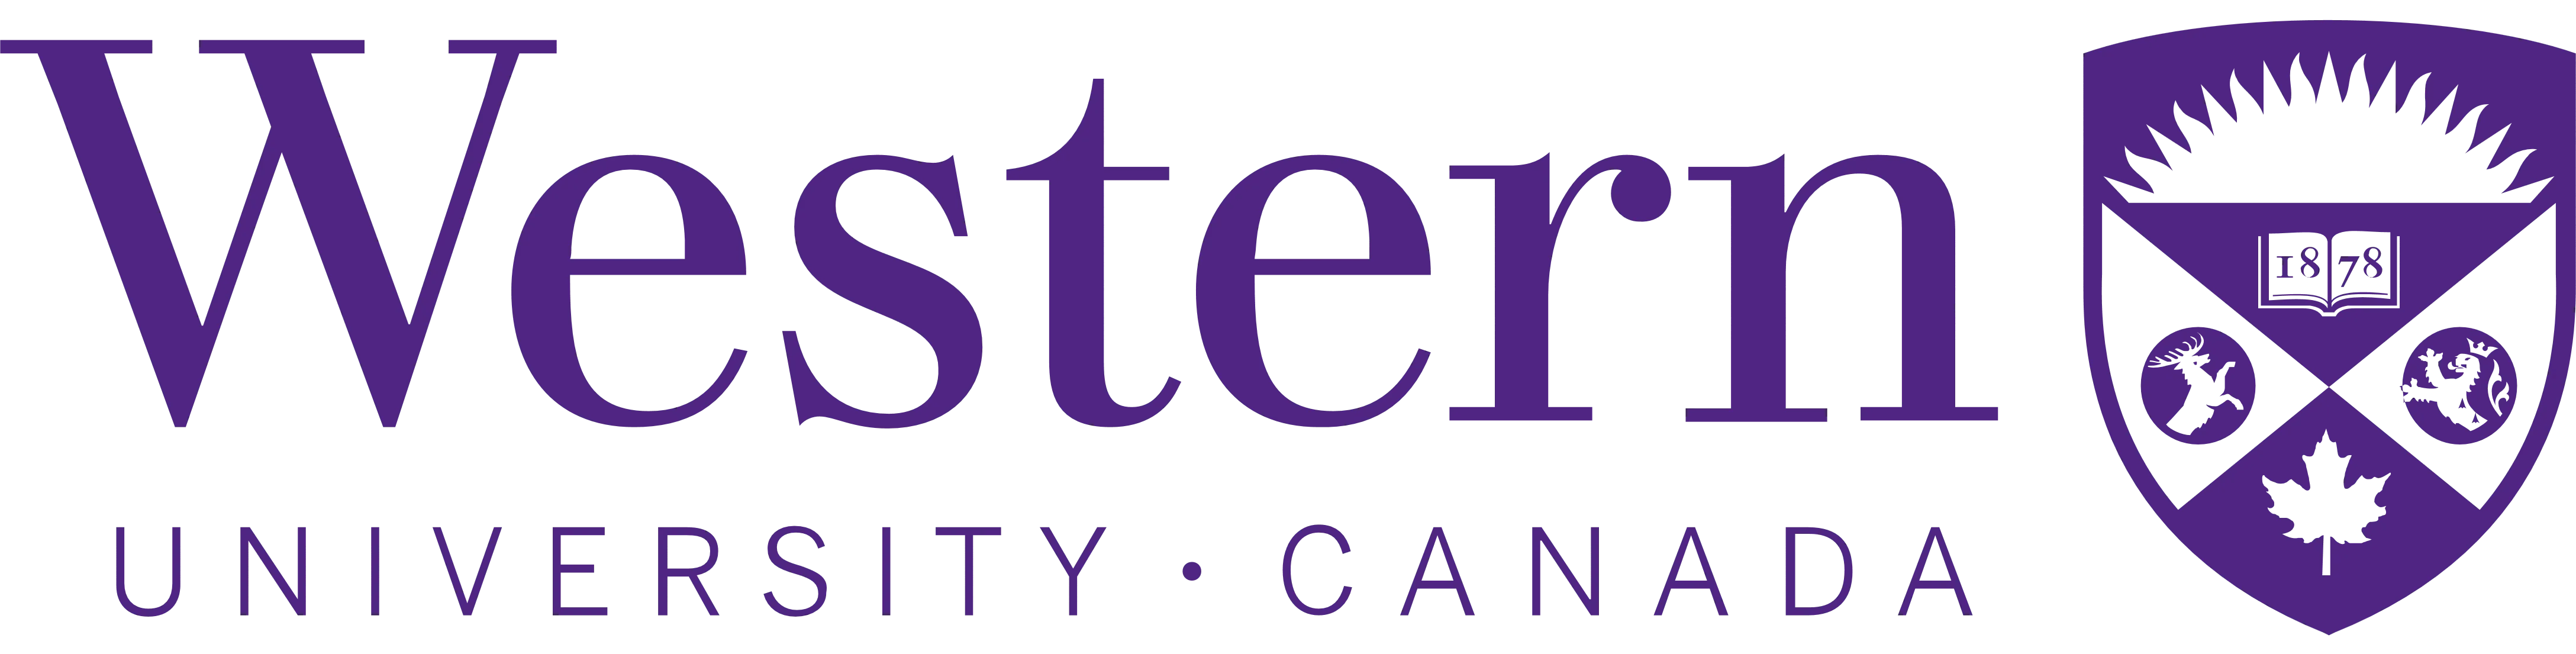 western-university-canada-logo